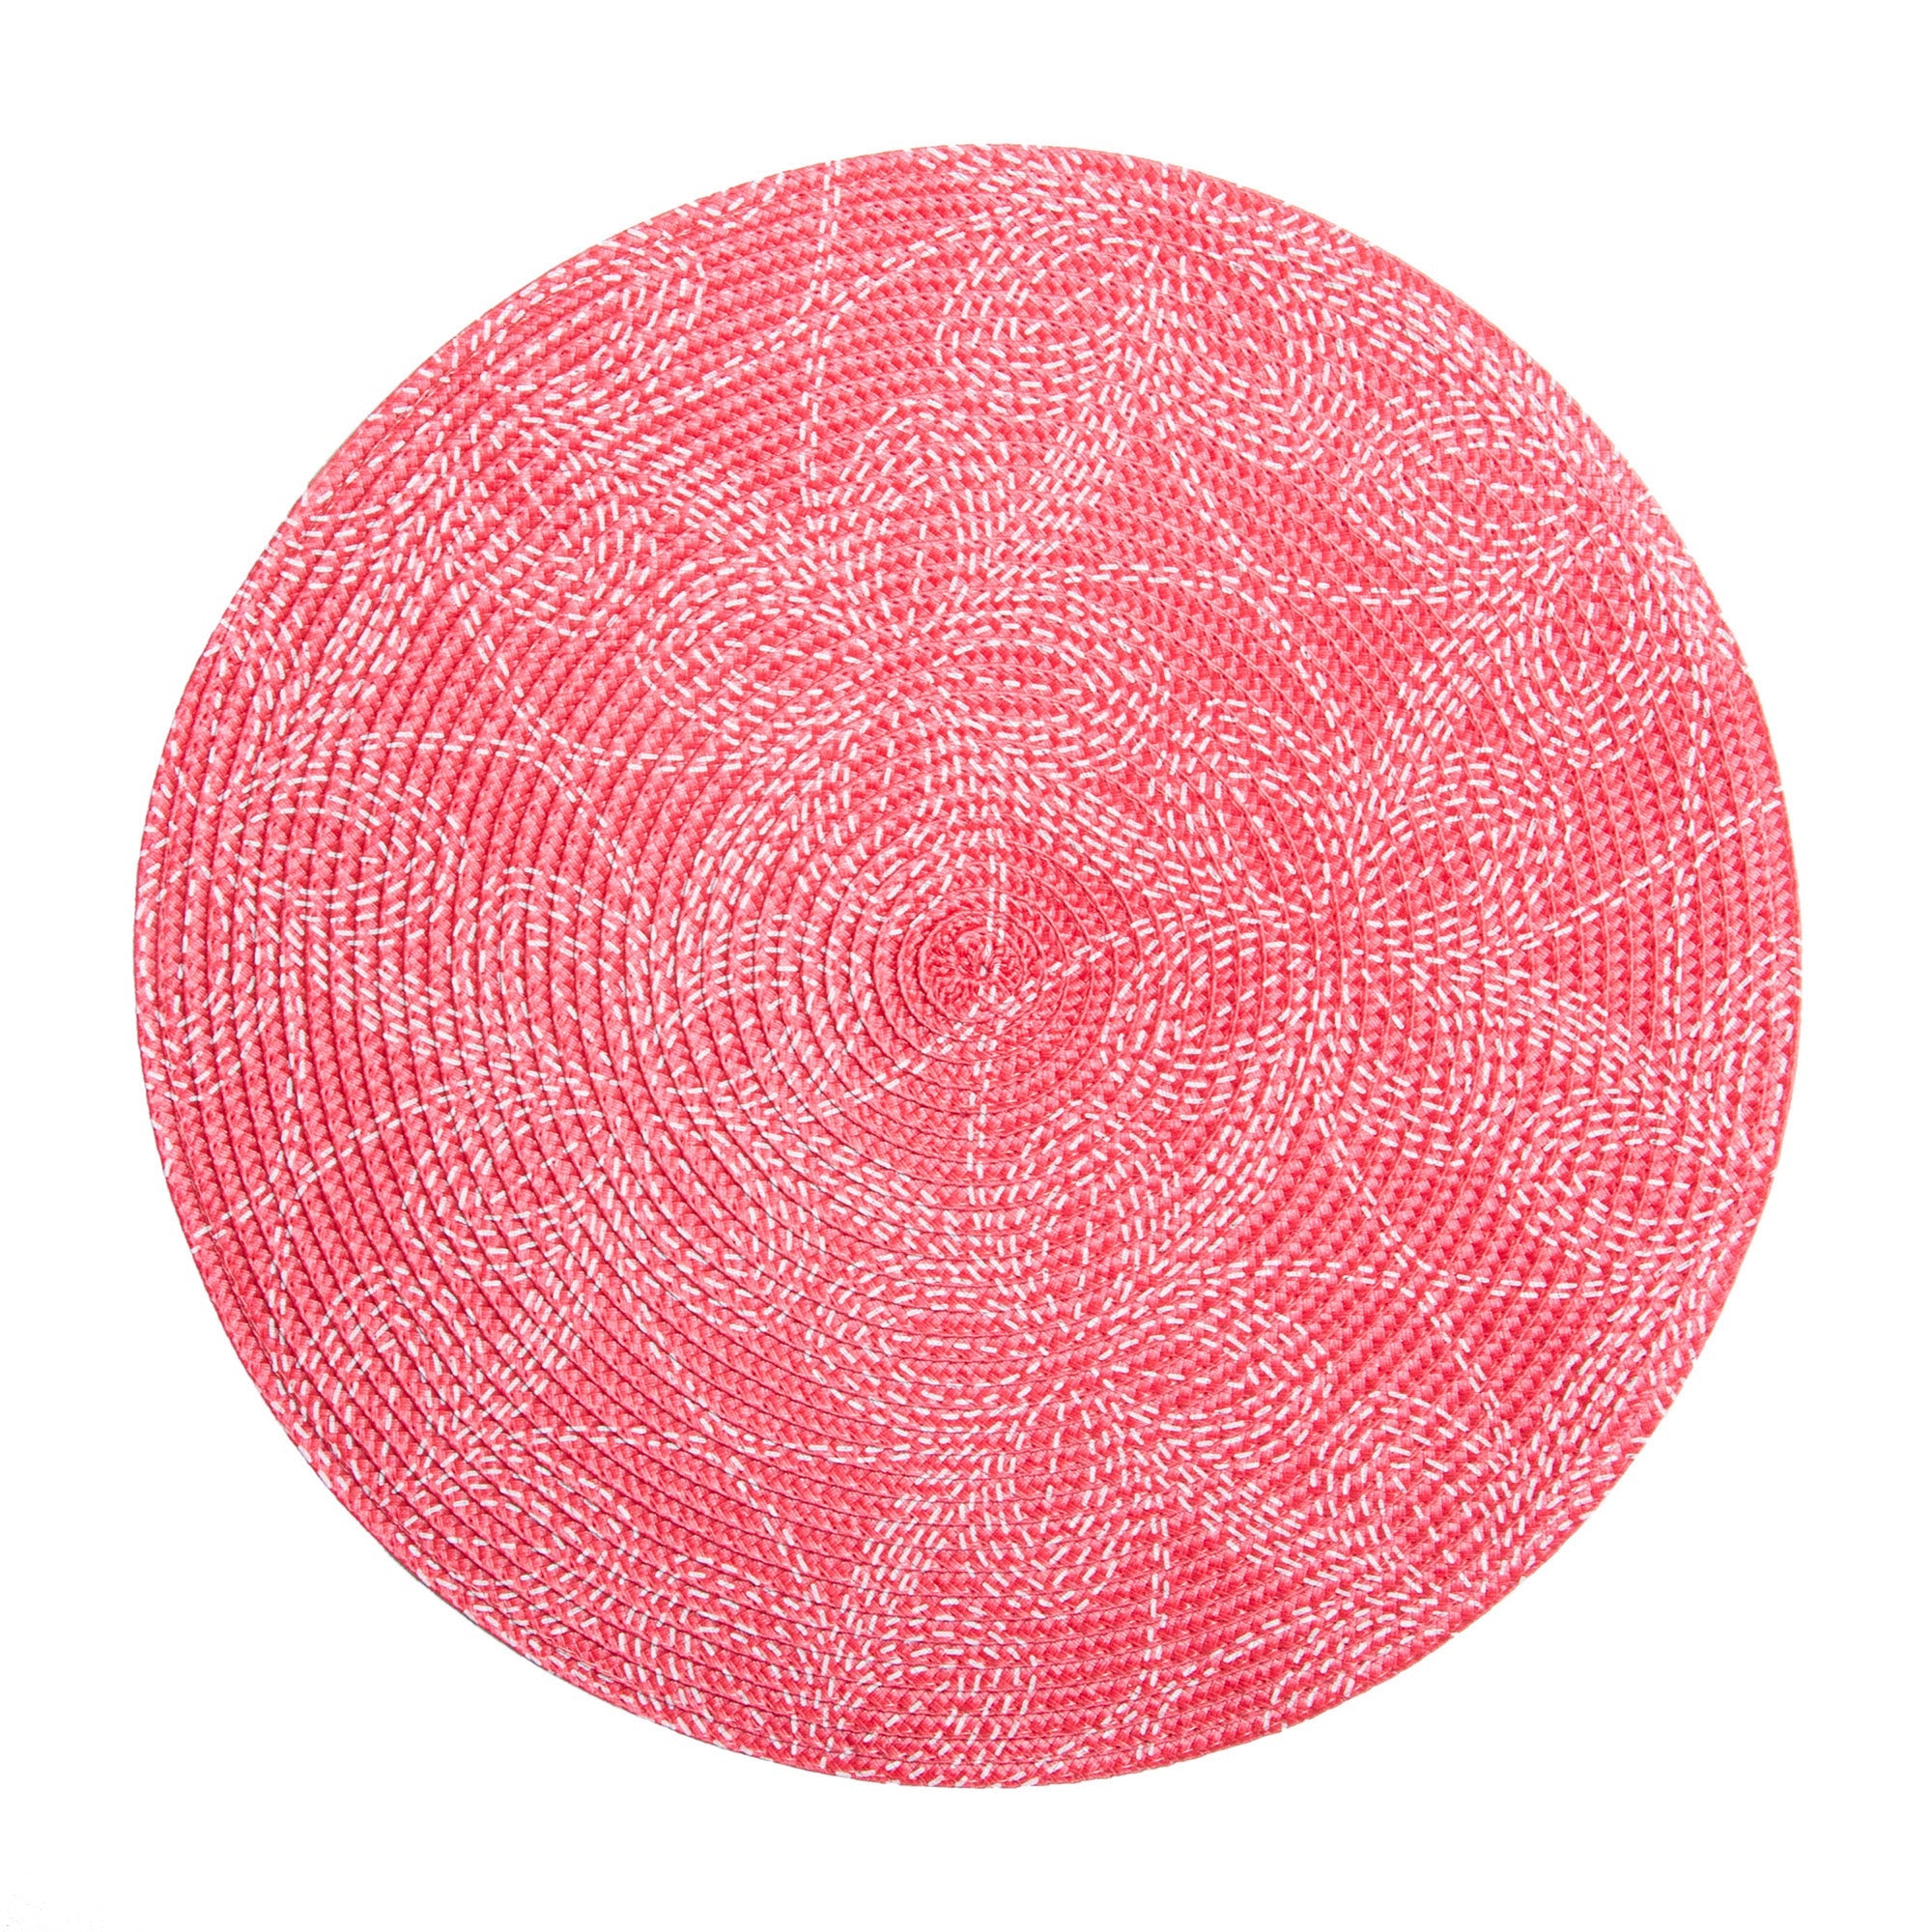 Printed Round Placemat Pink 100% Polypropylene 15in dia.  38cm dia.